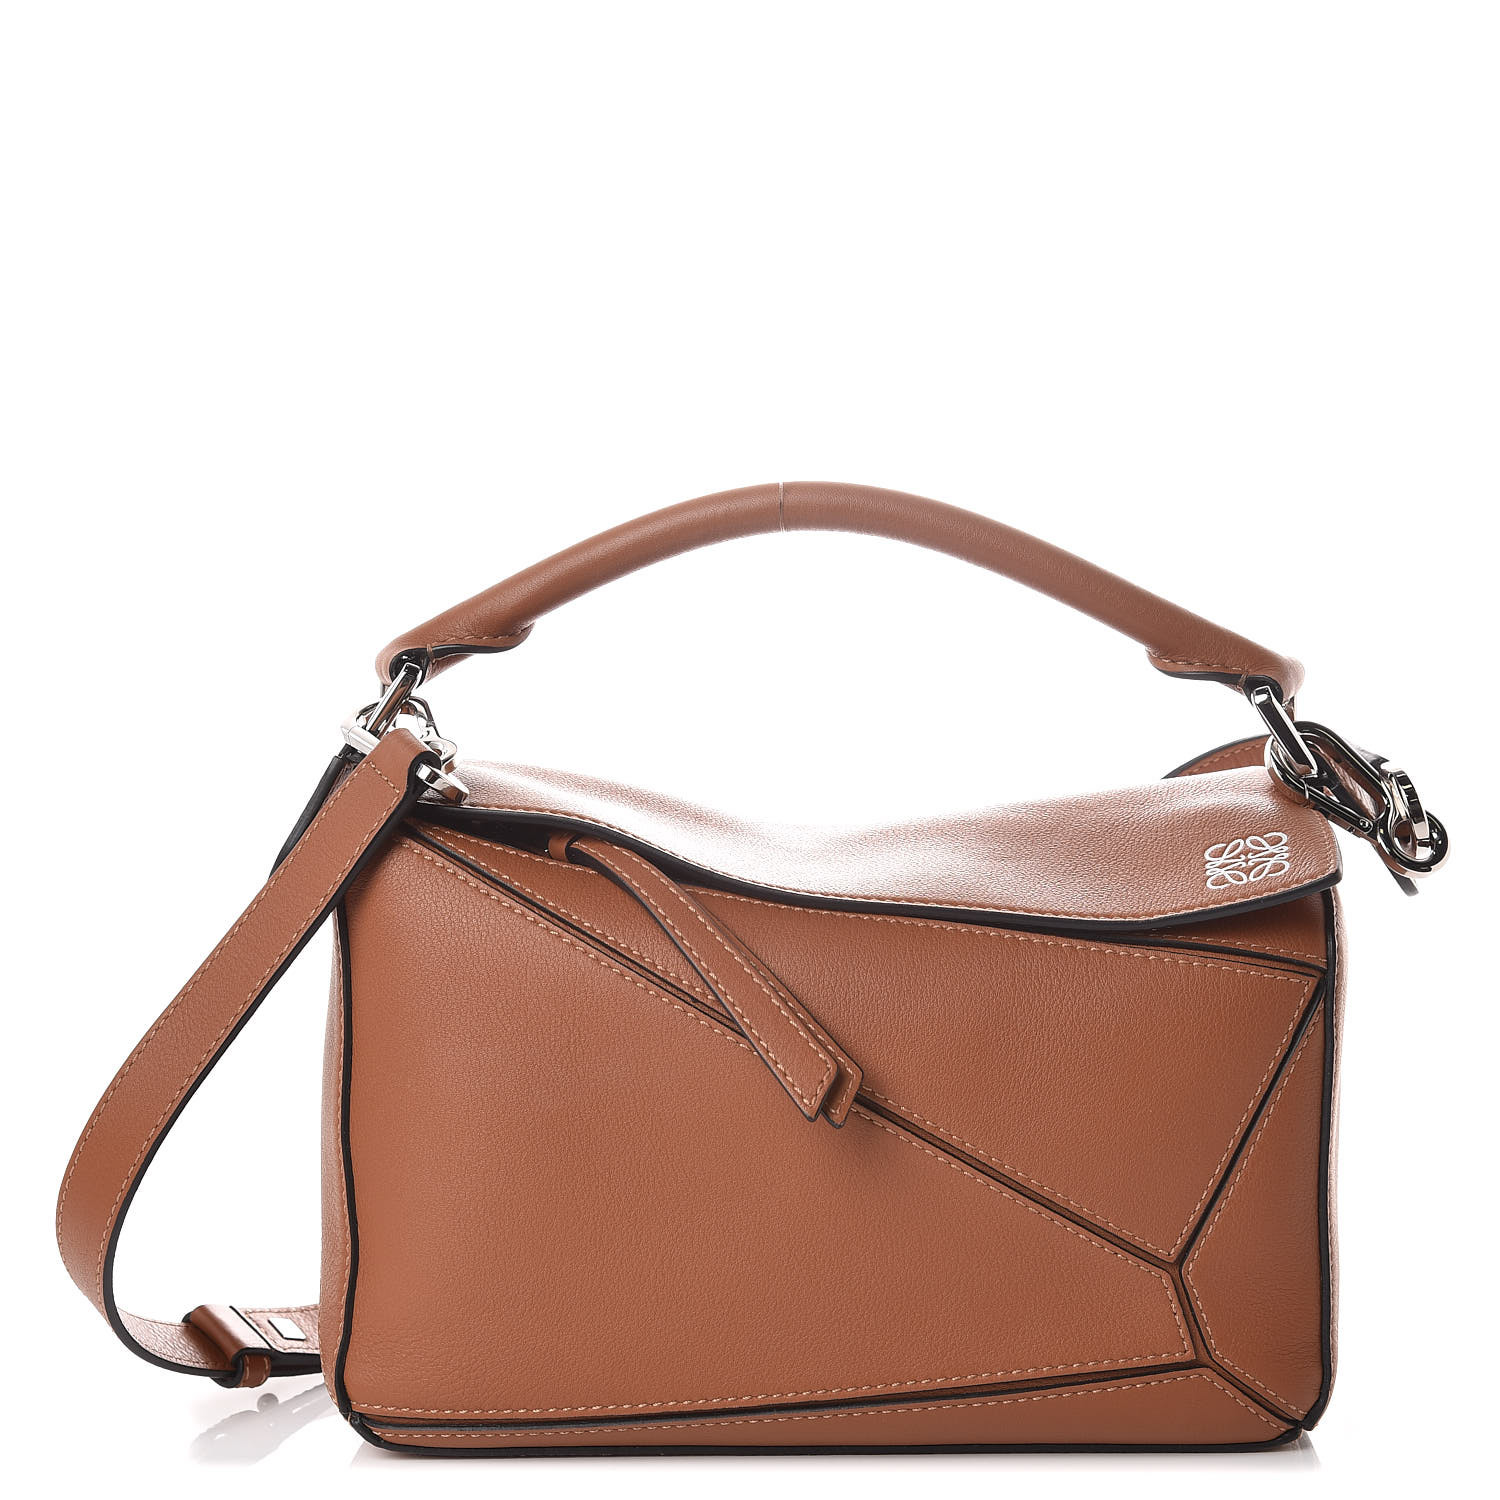 Loewe Puzzle Bag Fashionphile Top Sellers, 57% OFF 